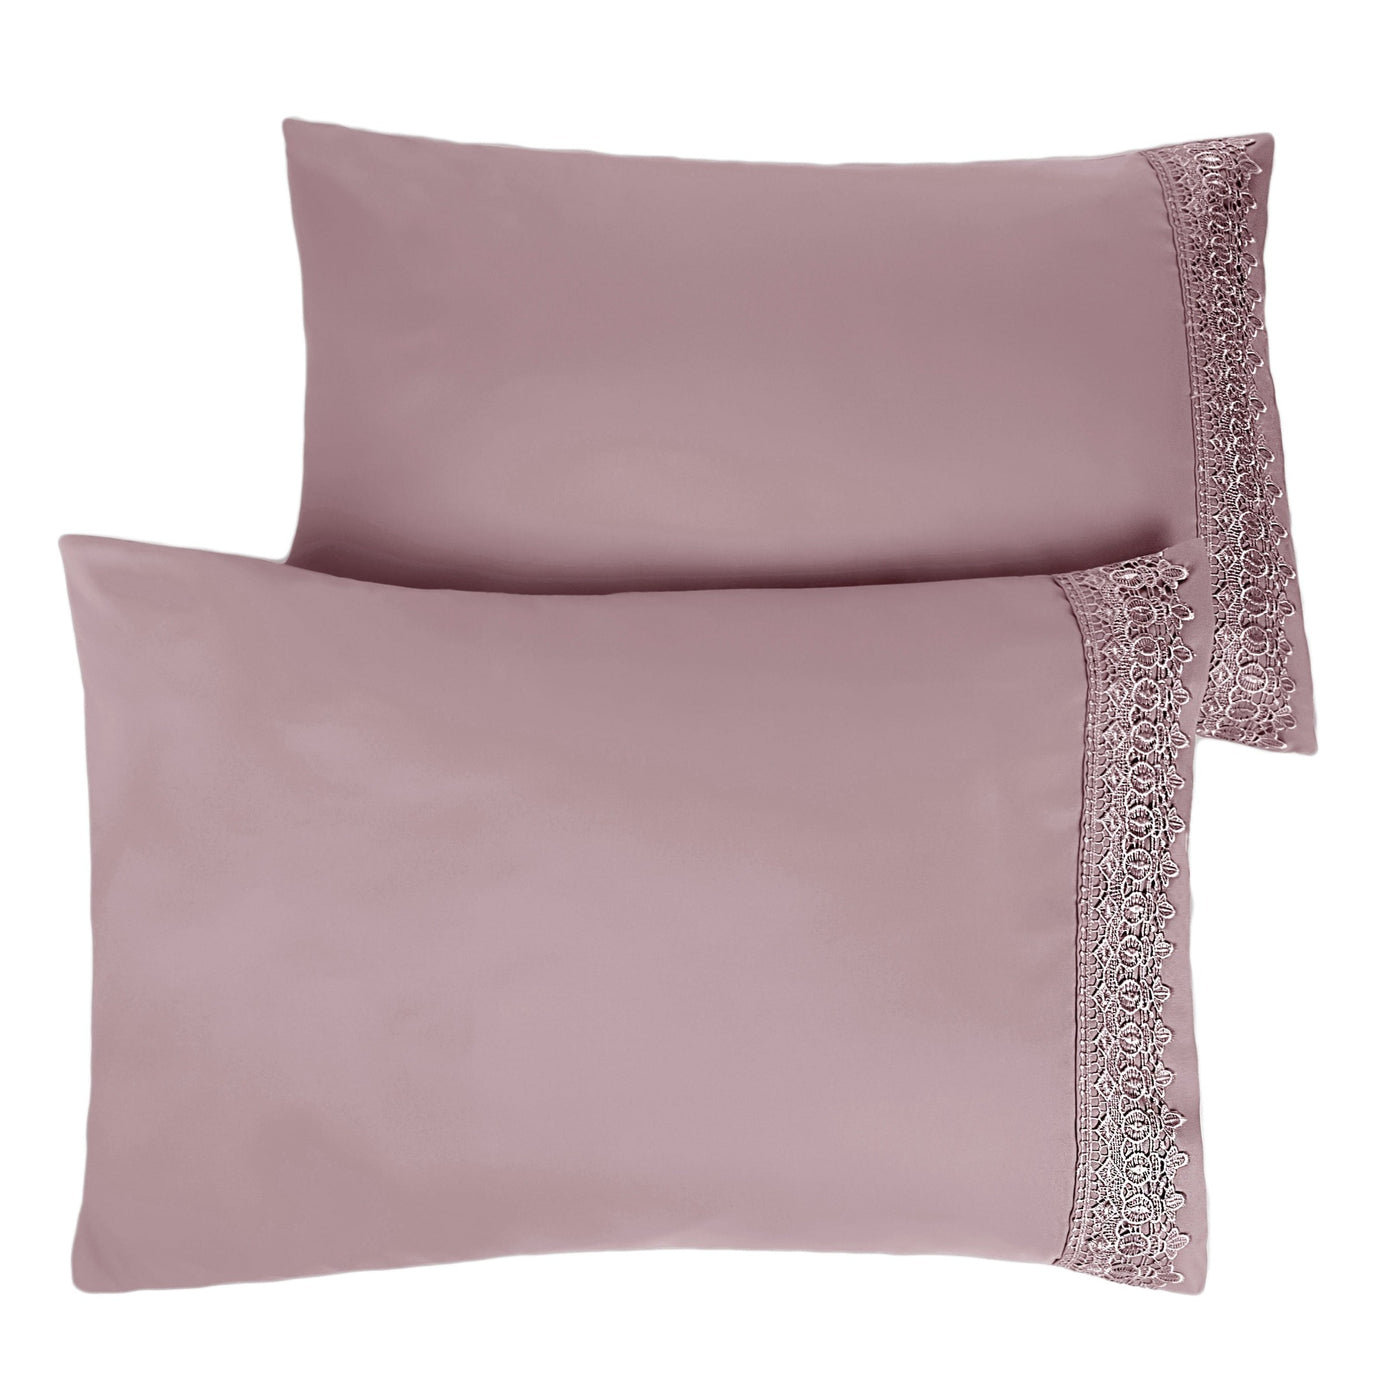 Two Vilano Lace Hem Pillow Cases in Lavender Stack Together#color_vilano-lavender